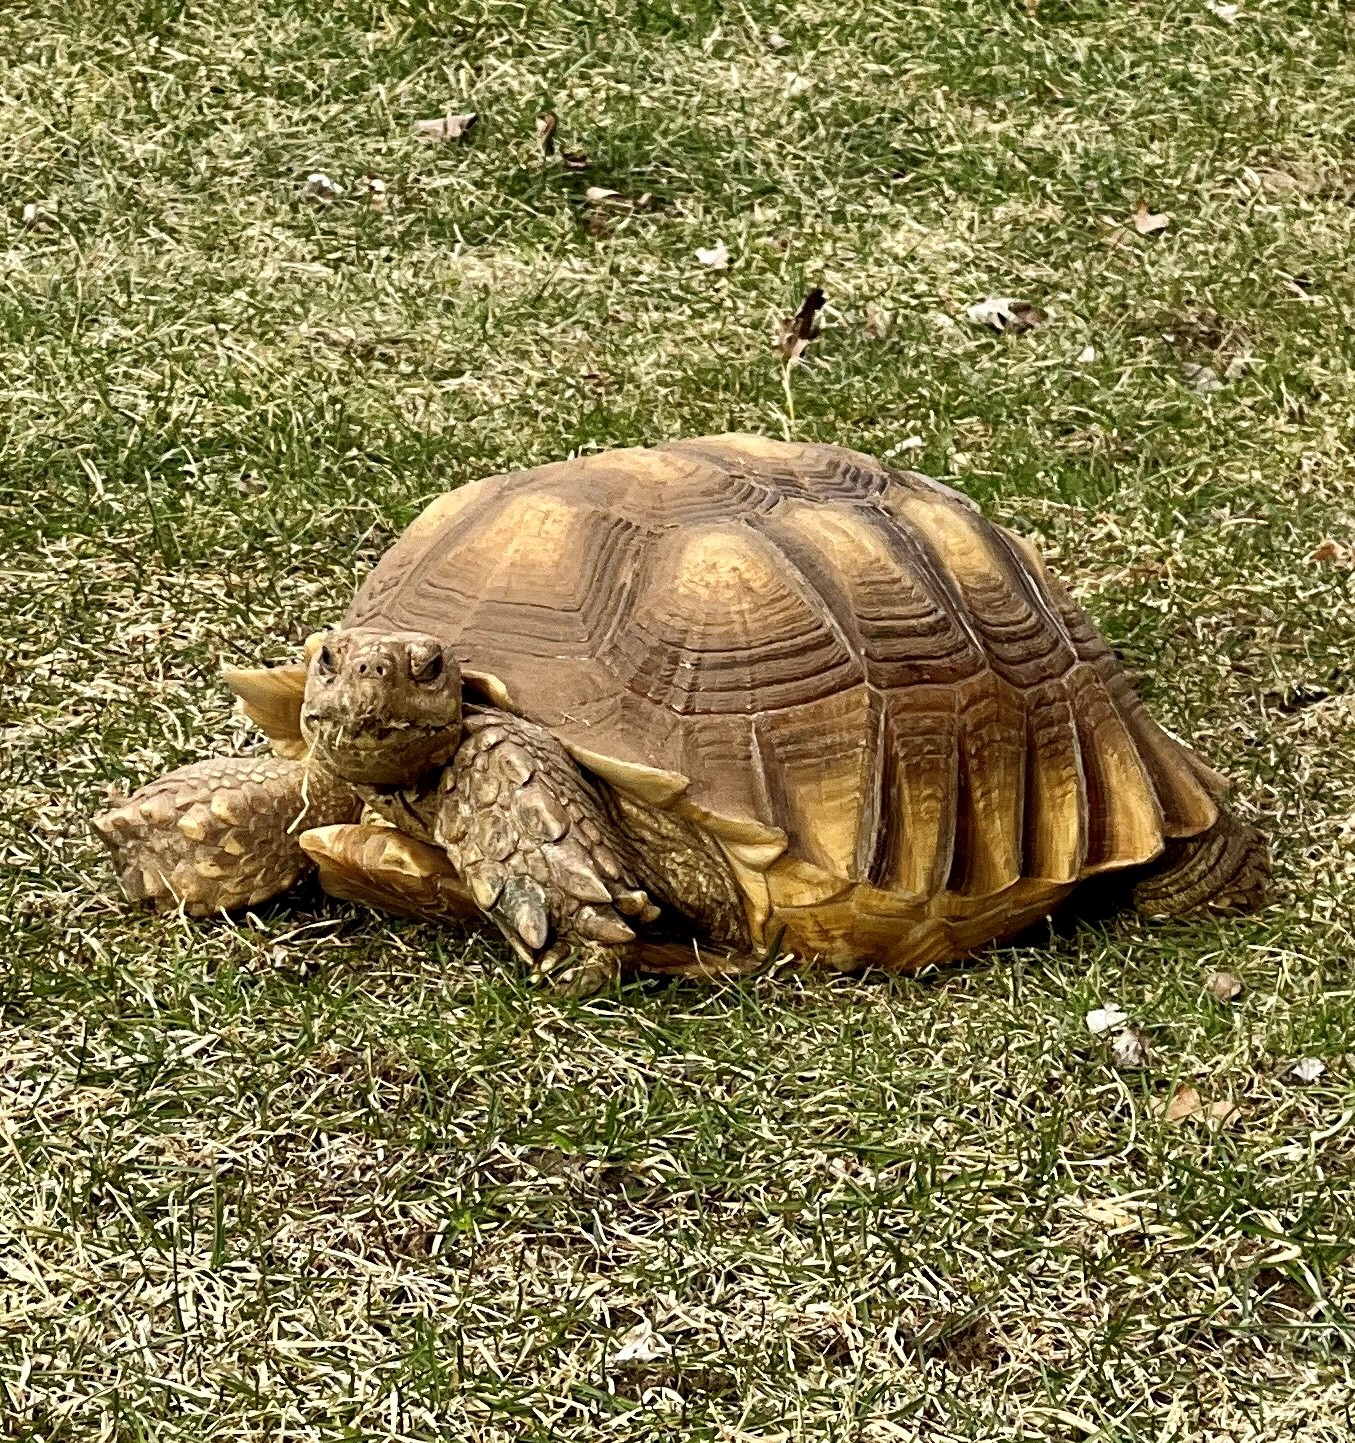 Image of Sheldon the tortoise